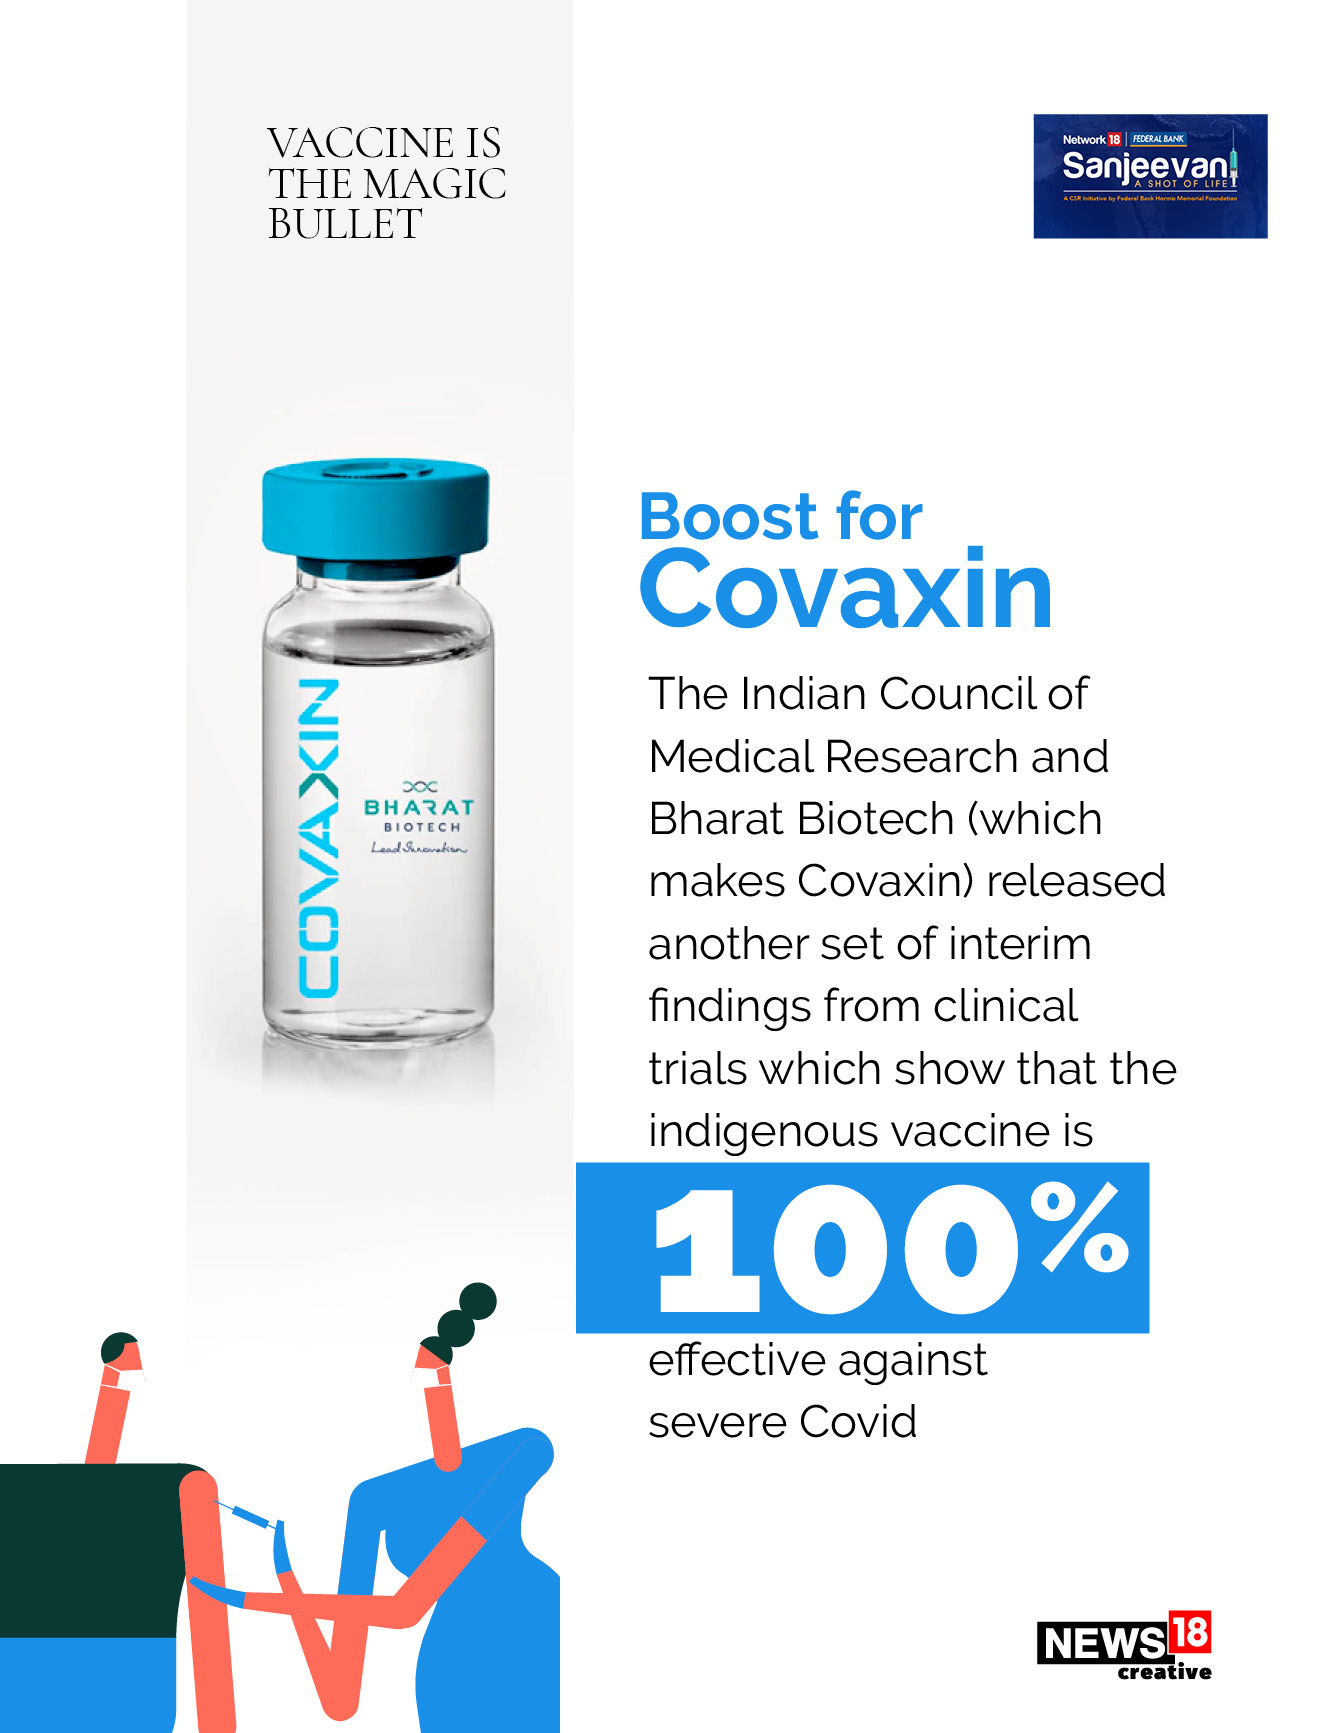 Covid-19: Post-vaccination coronavirus cases miniscule